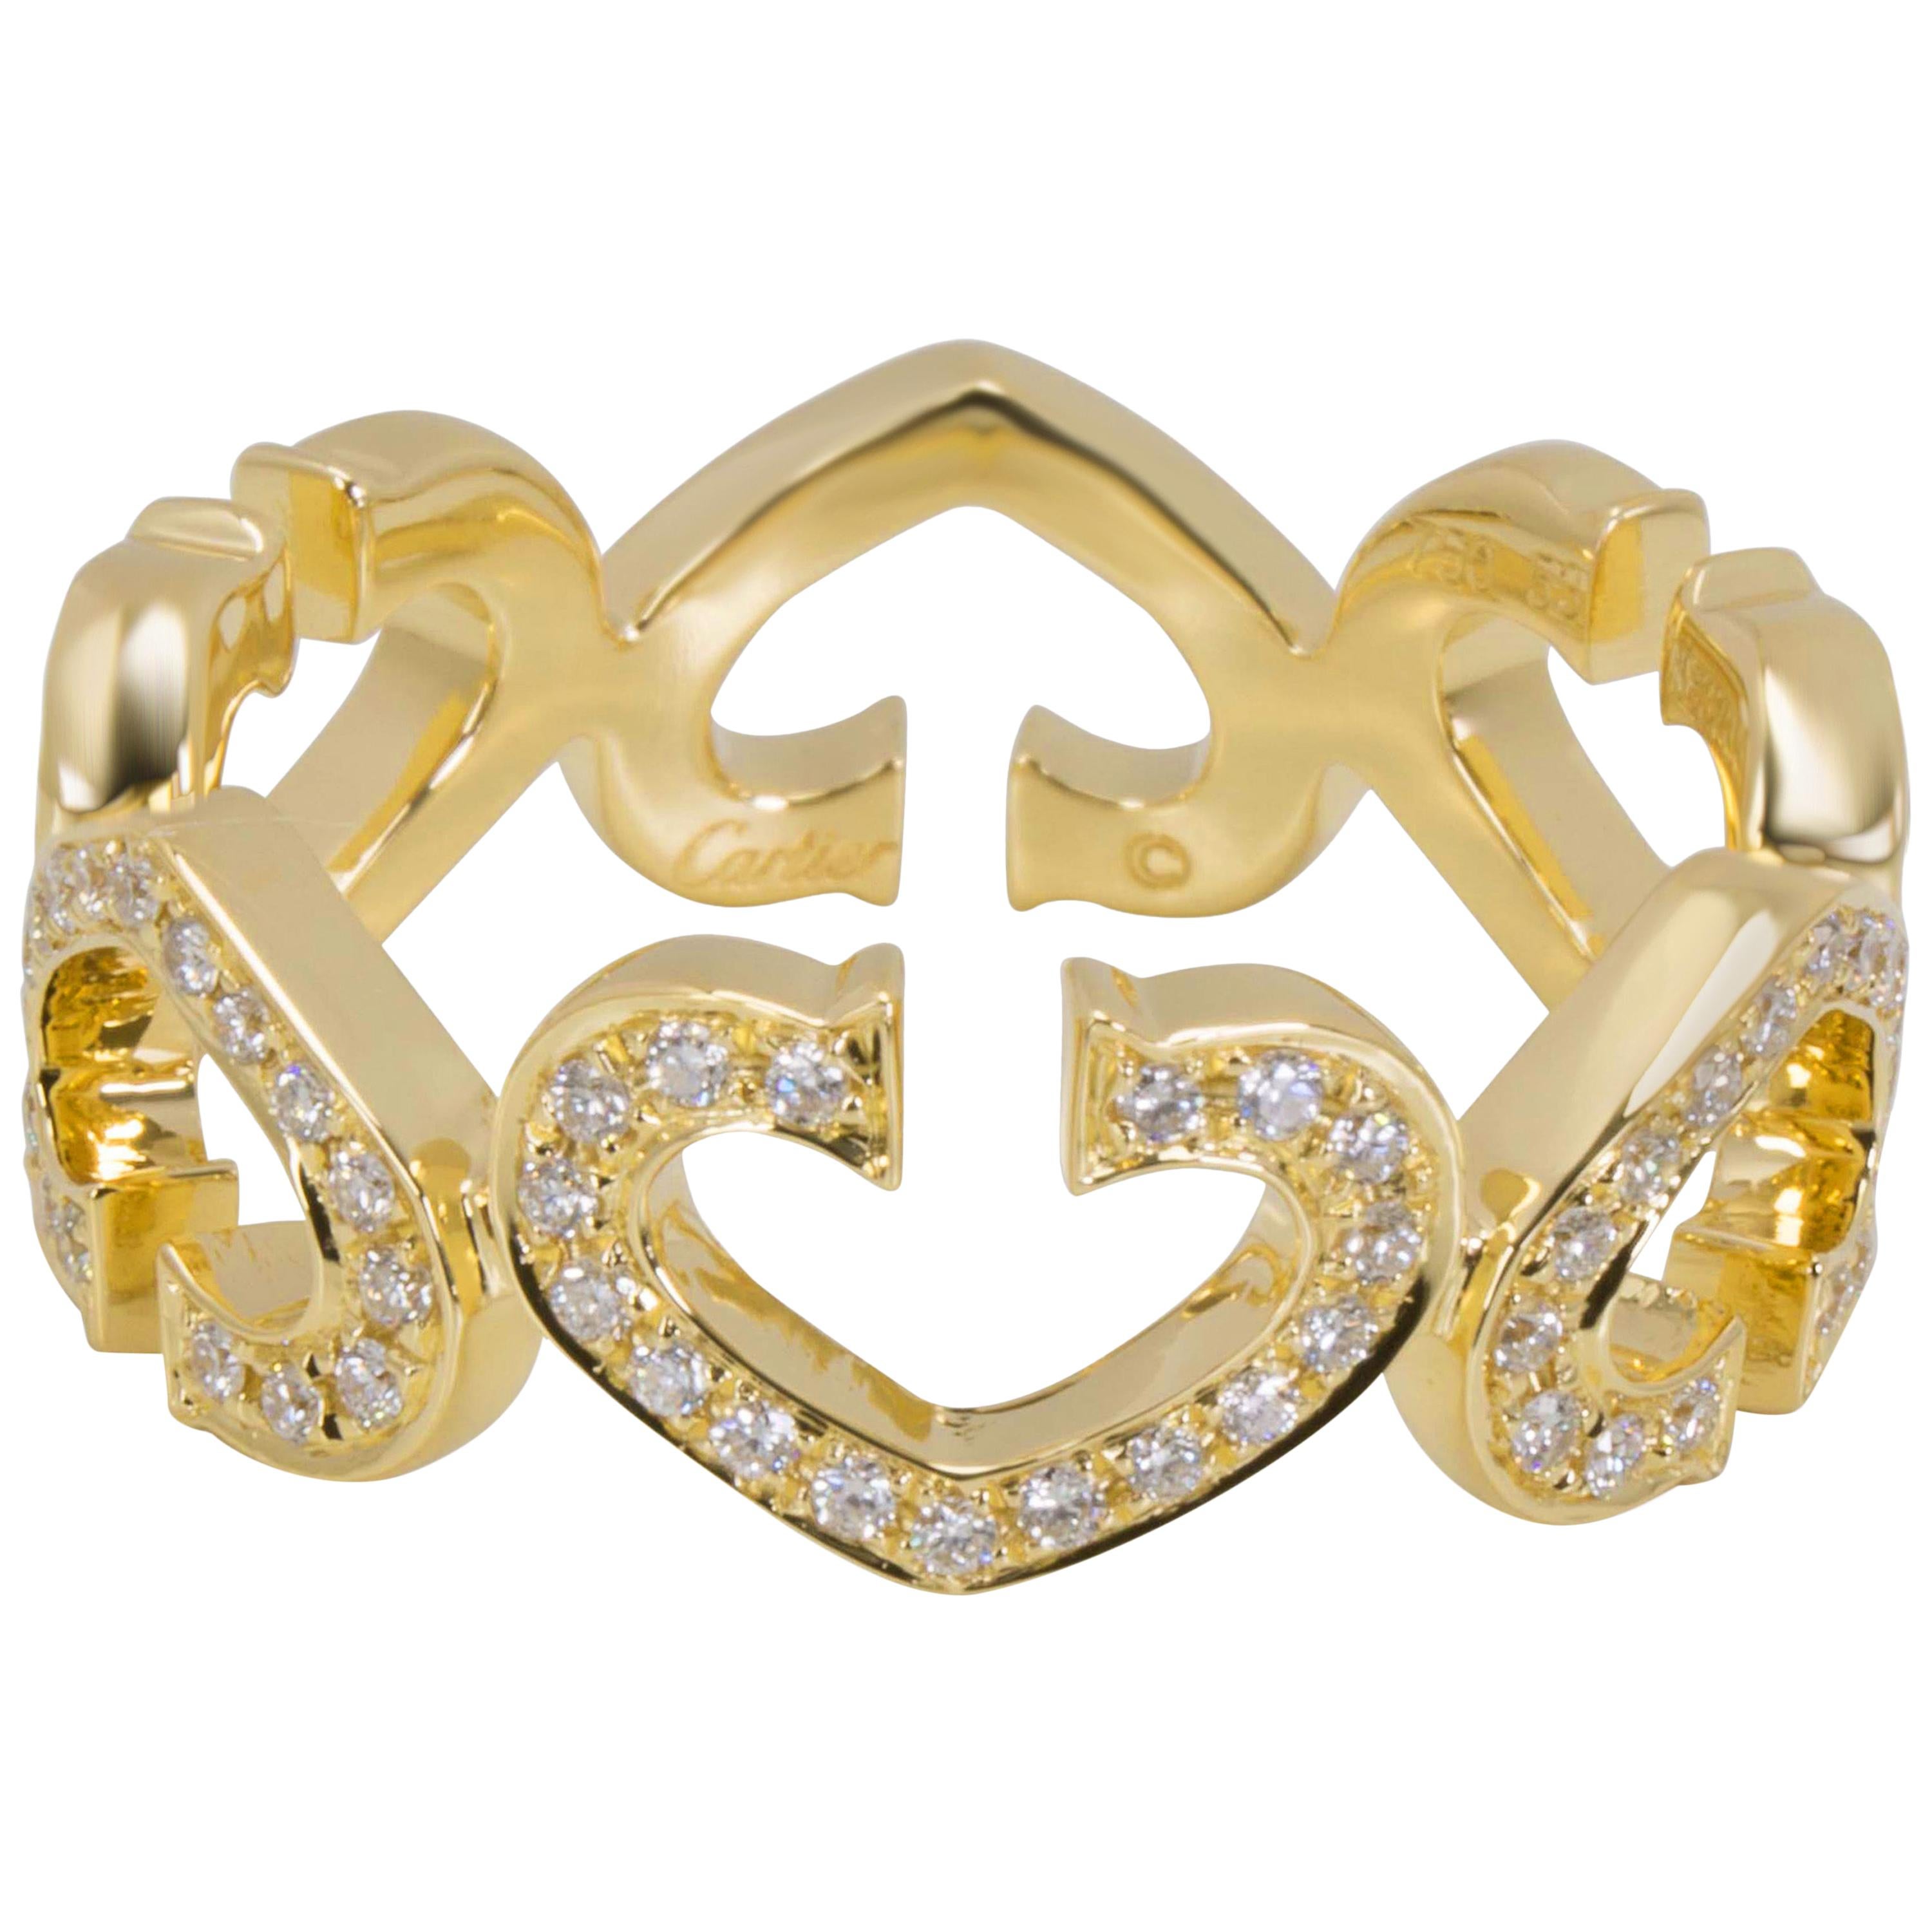 Cartier C Hearts of Cartier Diamond Ring in 18 Karat Yellow Gold '0.50 Carat'